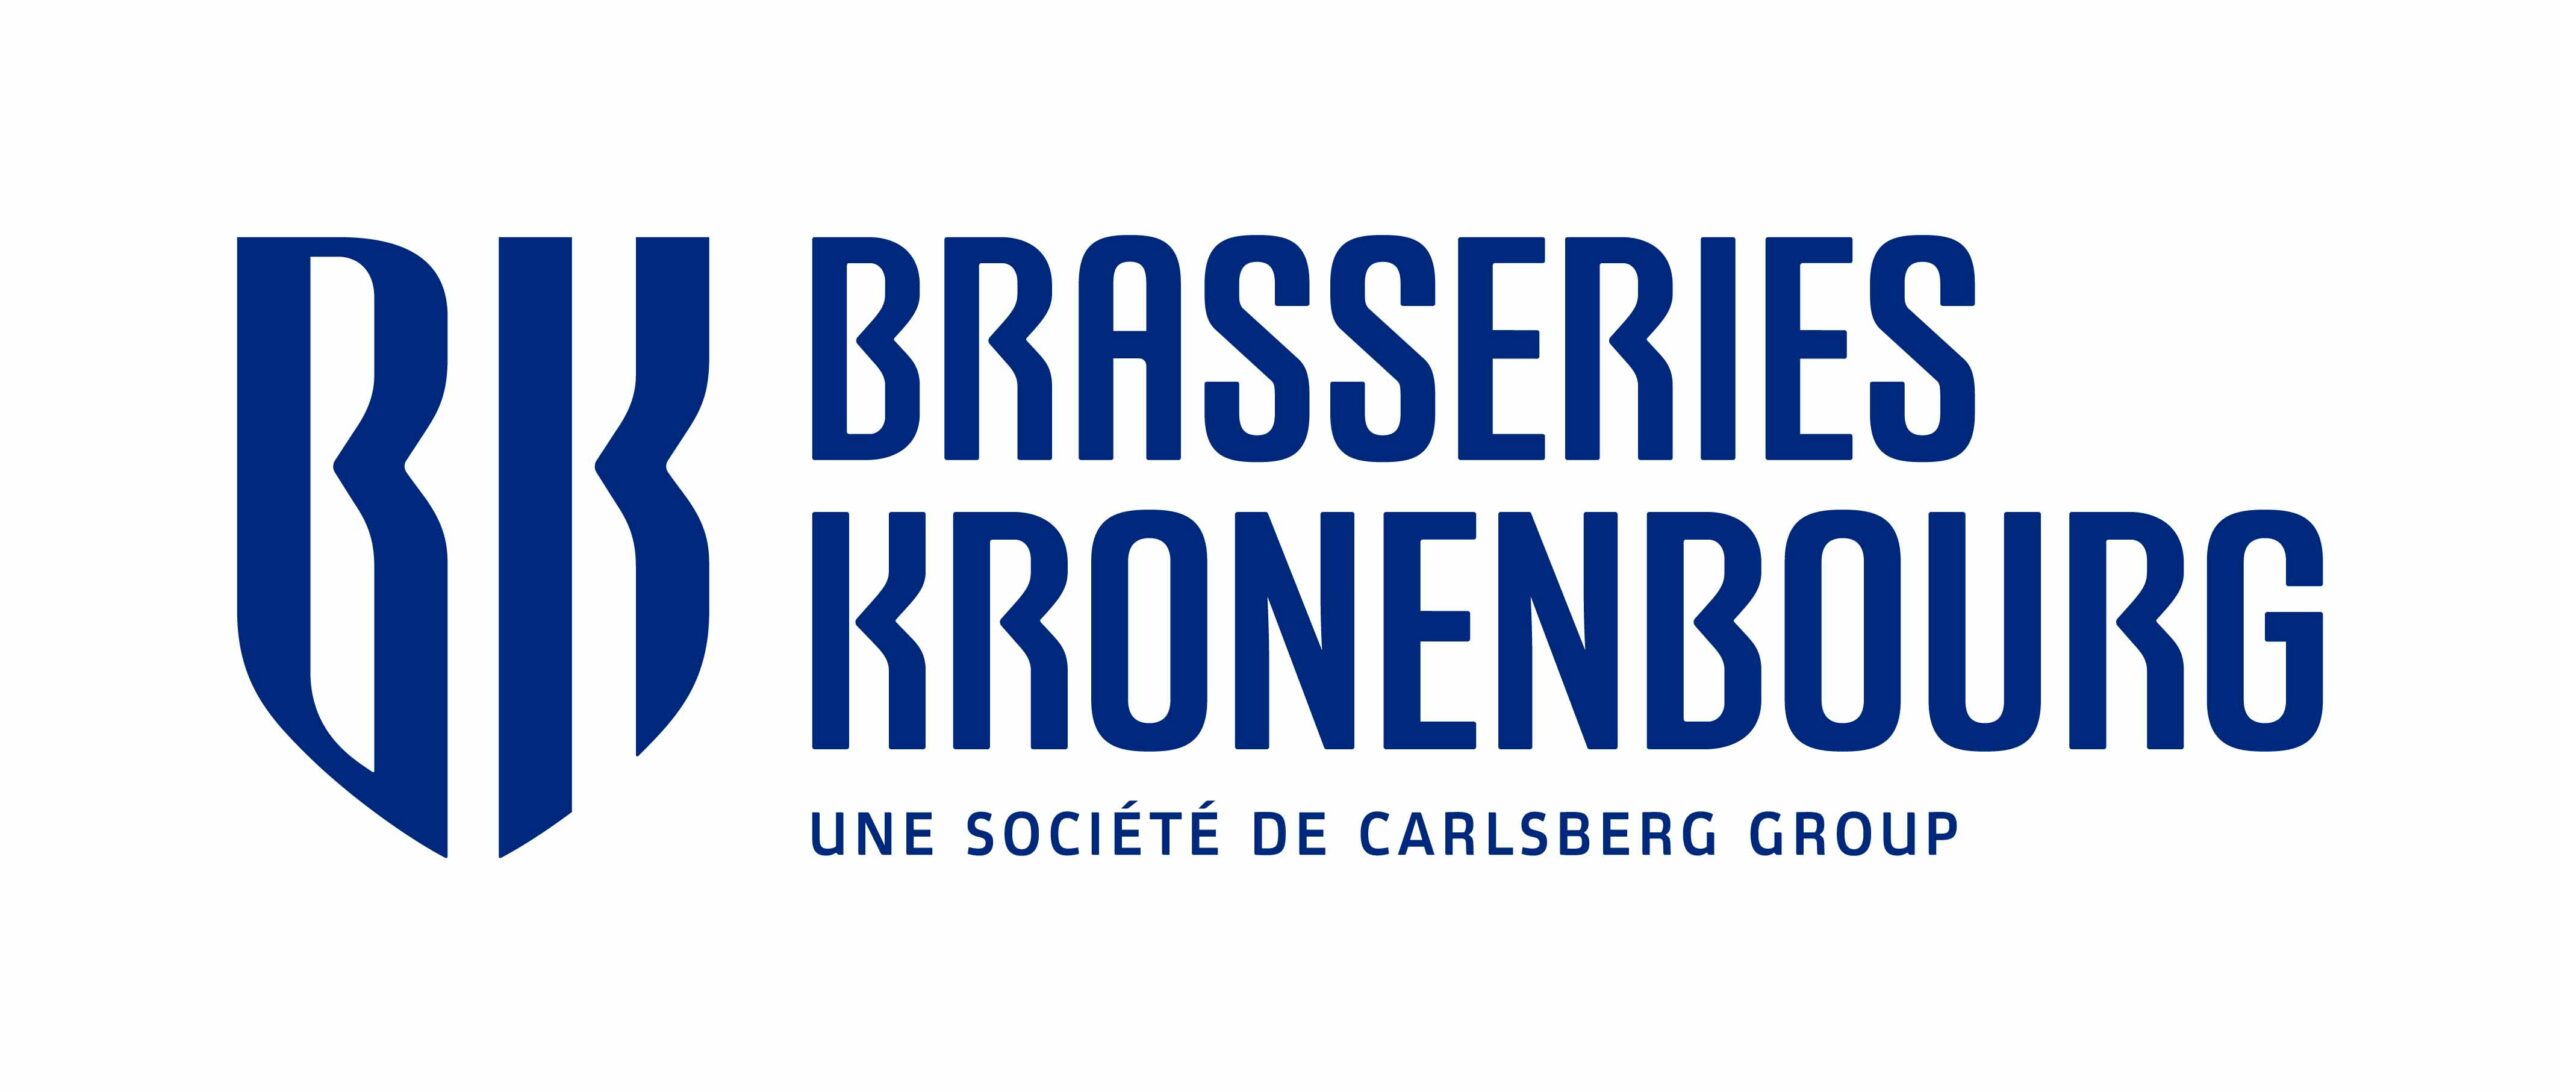 Logo Brasseries Kronenbourg I Directrice artistique I Graphisme - Illustration - Photographie I Dôriane I Haguenau, Alsace